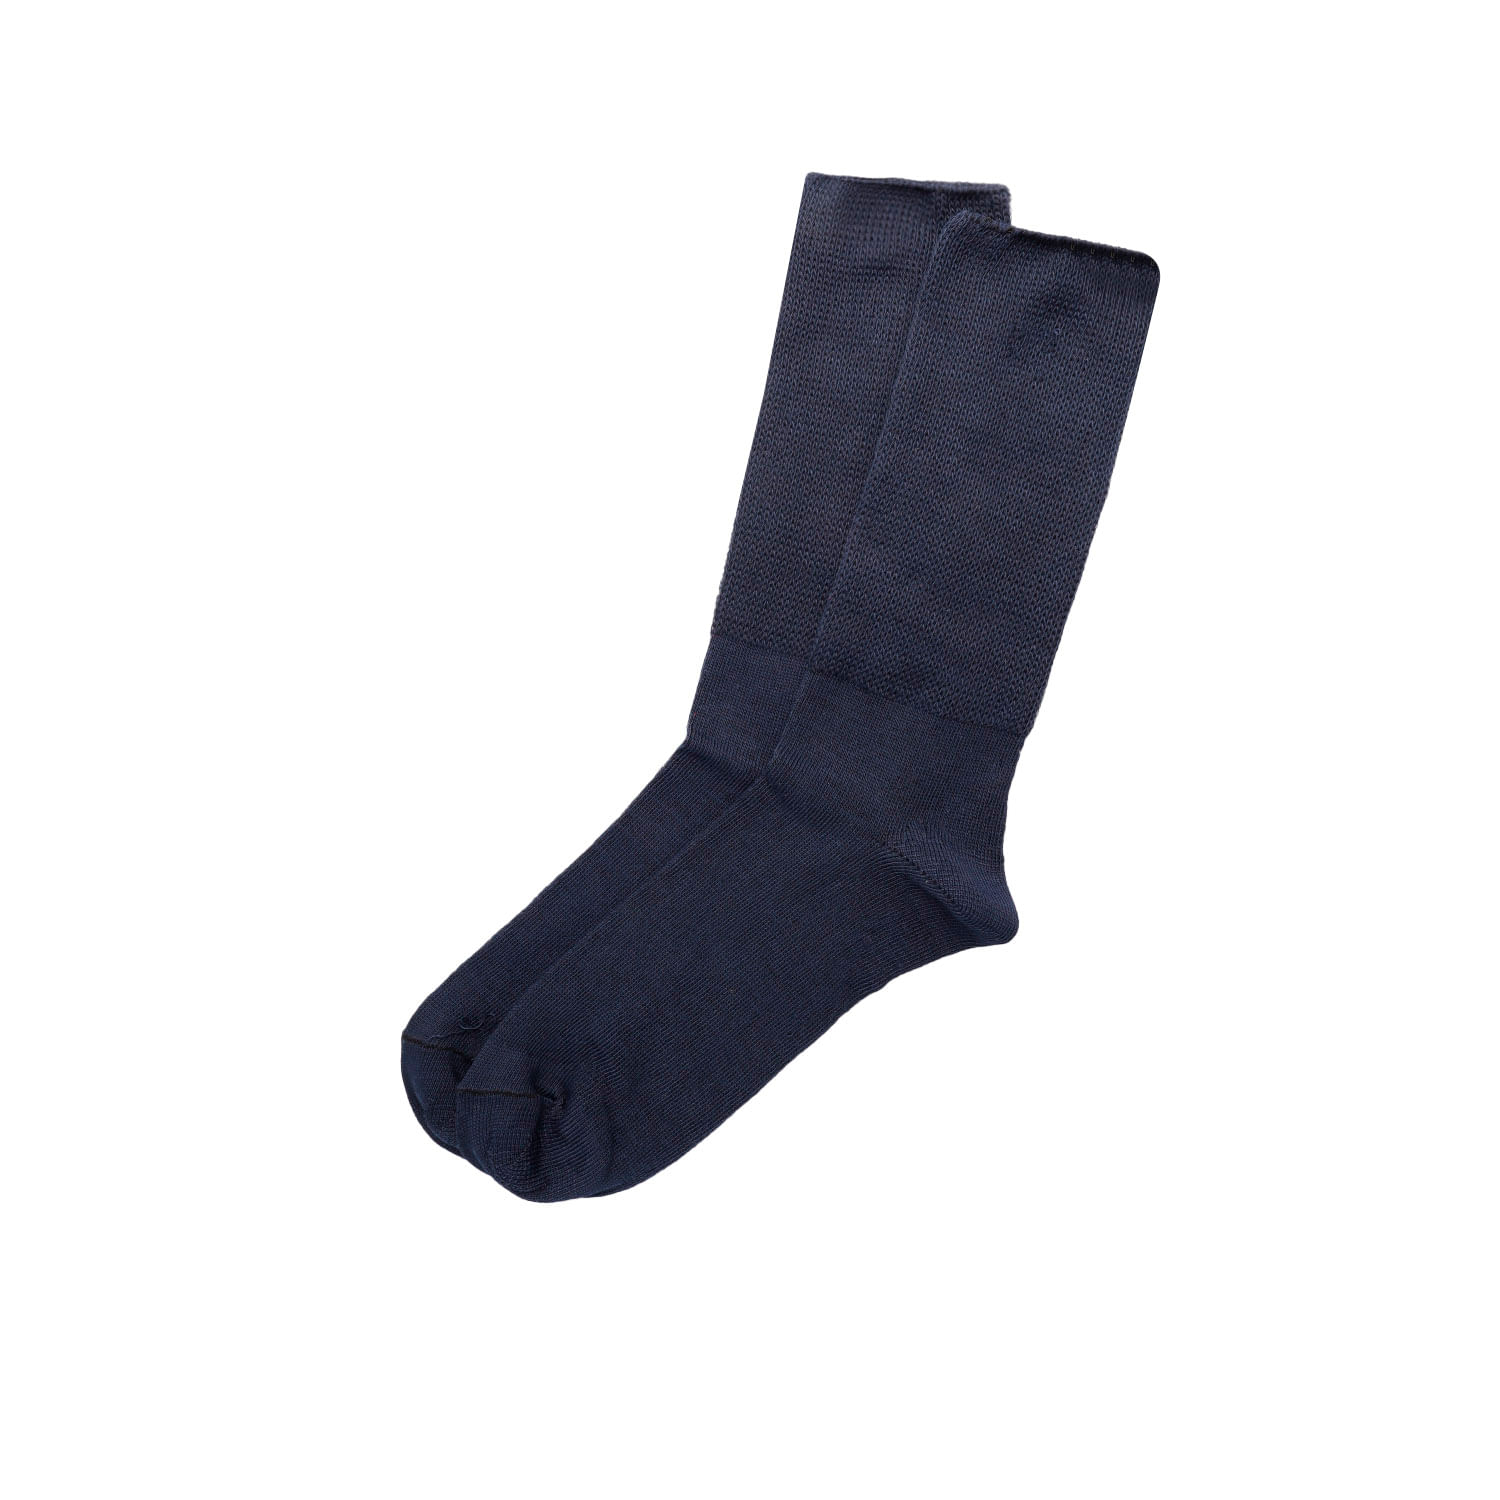 Calcetines cortos con rayas dobles azul marino para mujer - Rayas  dobles/Azul marino · FIGS